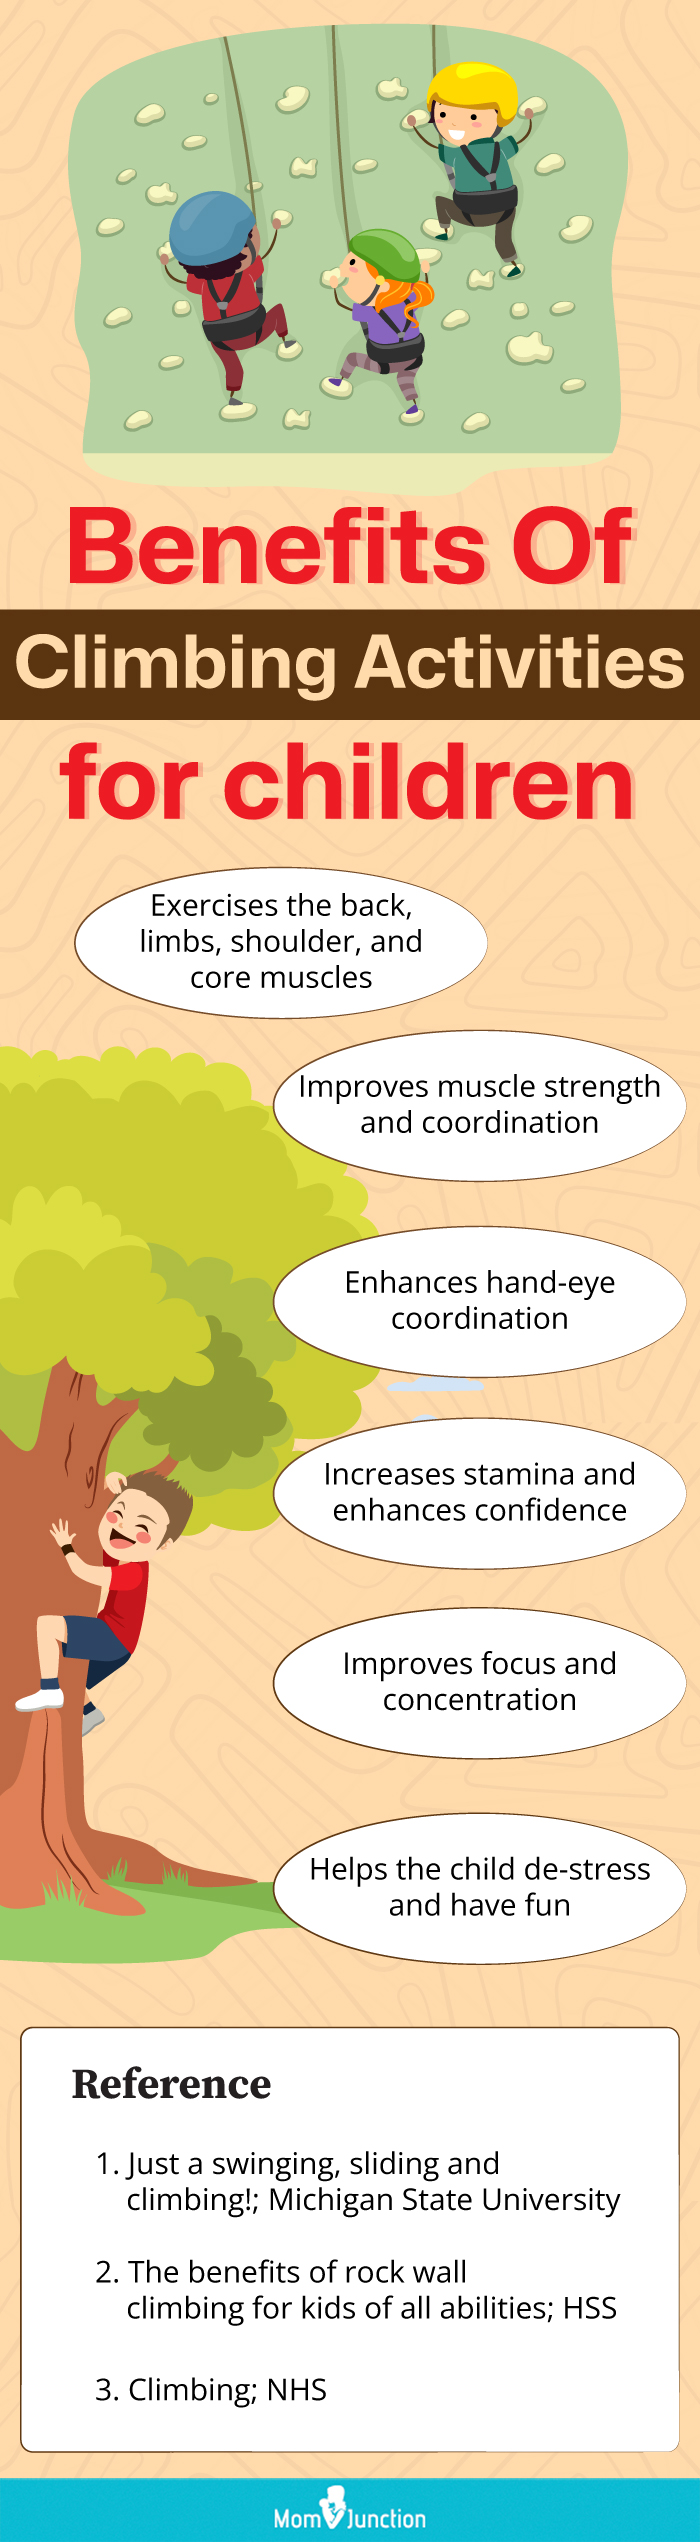 Benefits-Of-Climbing-Activities-For-Children (infographic)